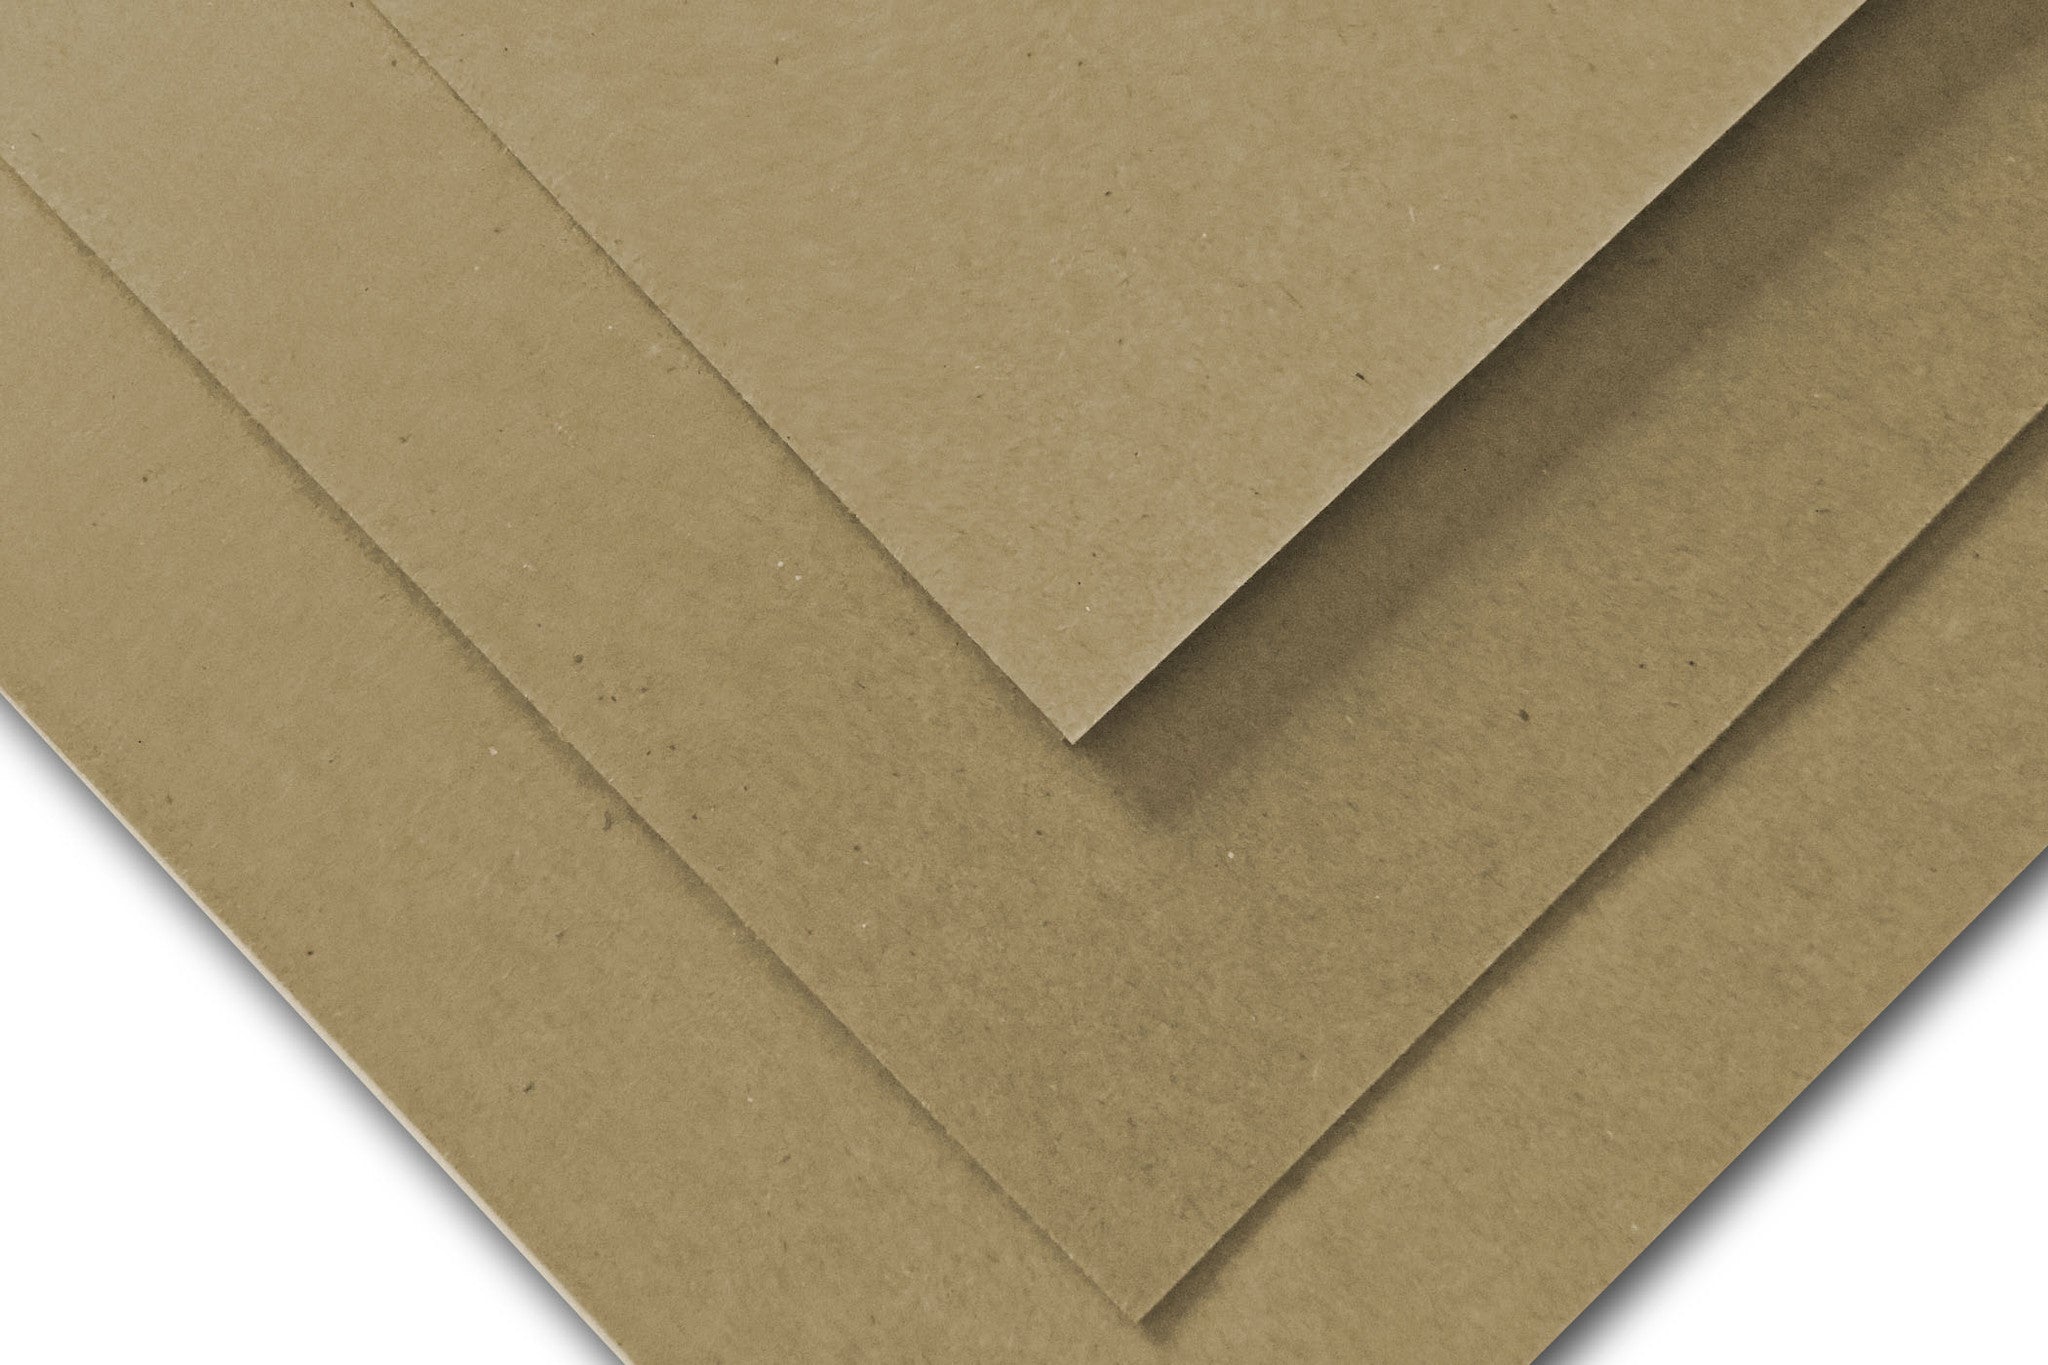 Dark Brown Cardstock - 8.5 x 11 inch - 65Lb Cover - 100 Sheets